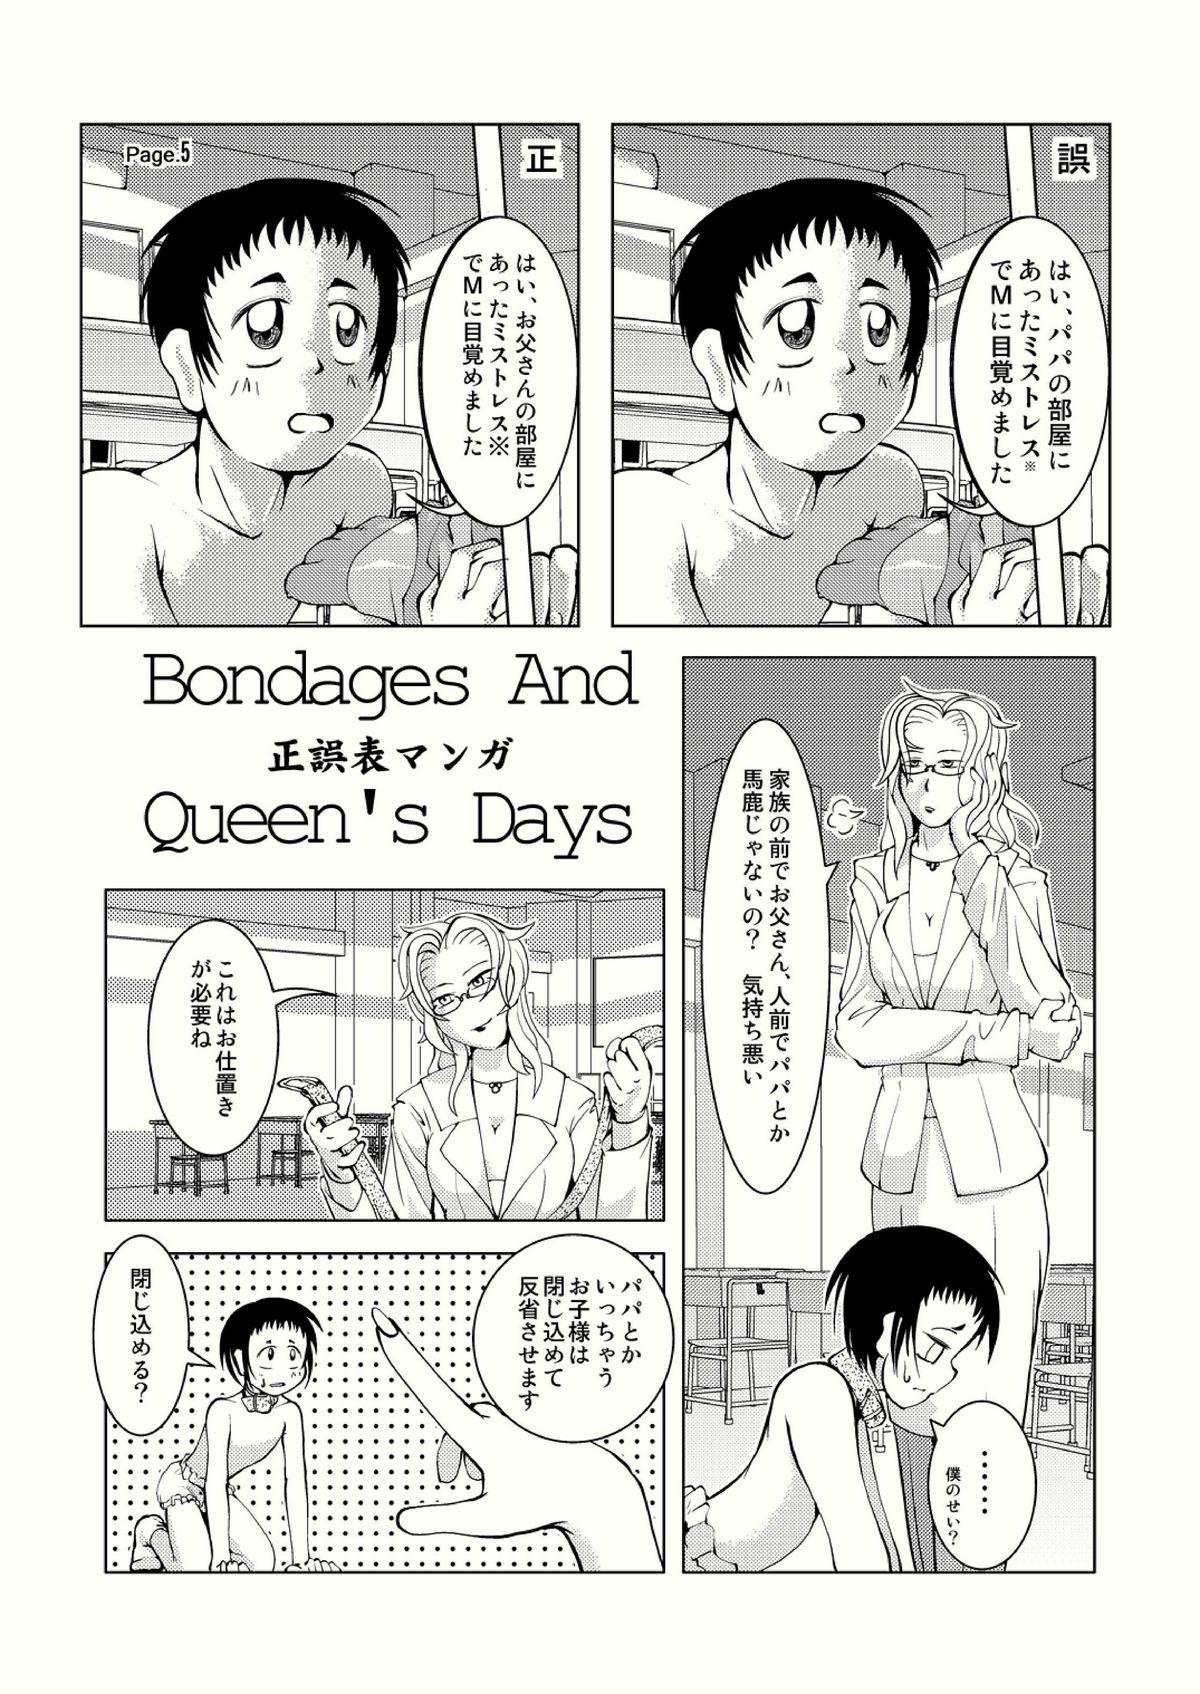 Bondages and Queens Days 42